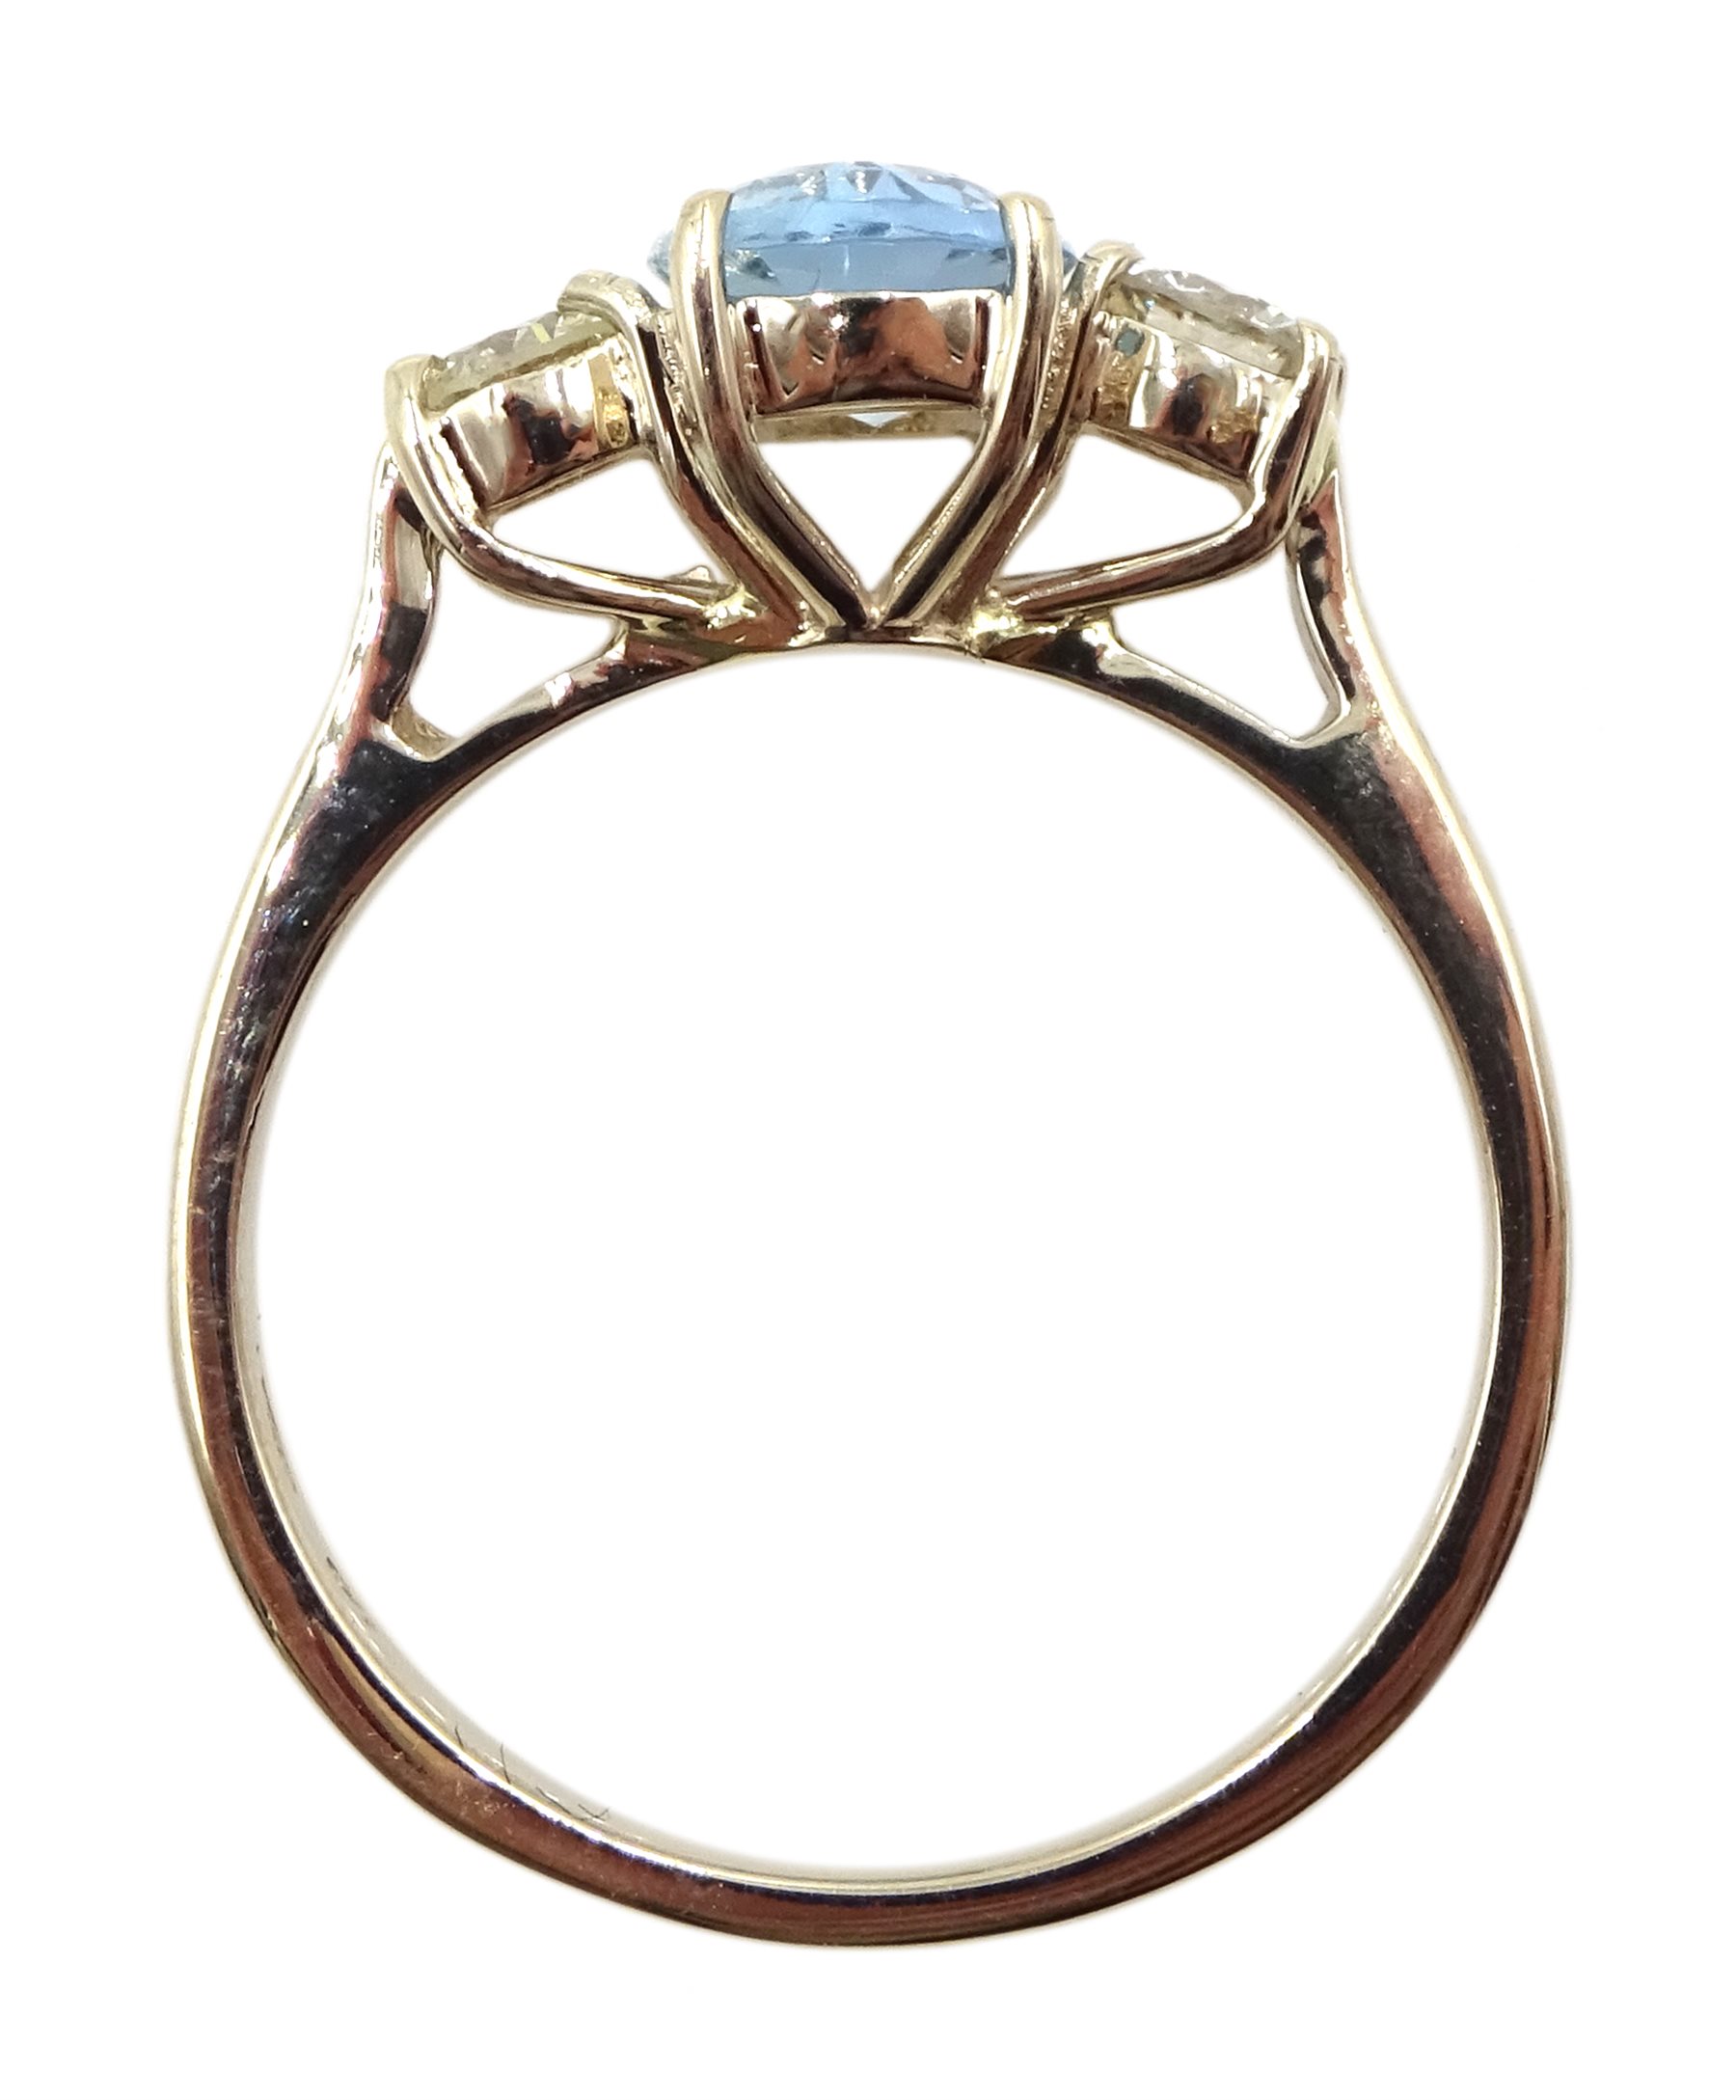 18ct gold three stone oval aquamarine and round brilliant cut diamond ring, hallmarked, aquamarine a - Image 3 of 4